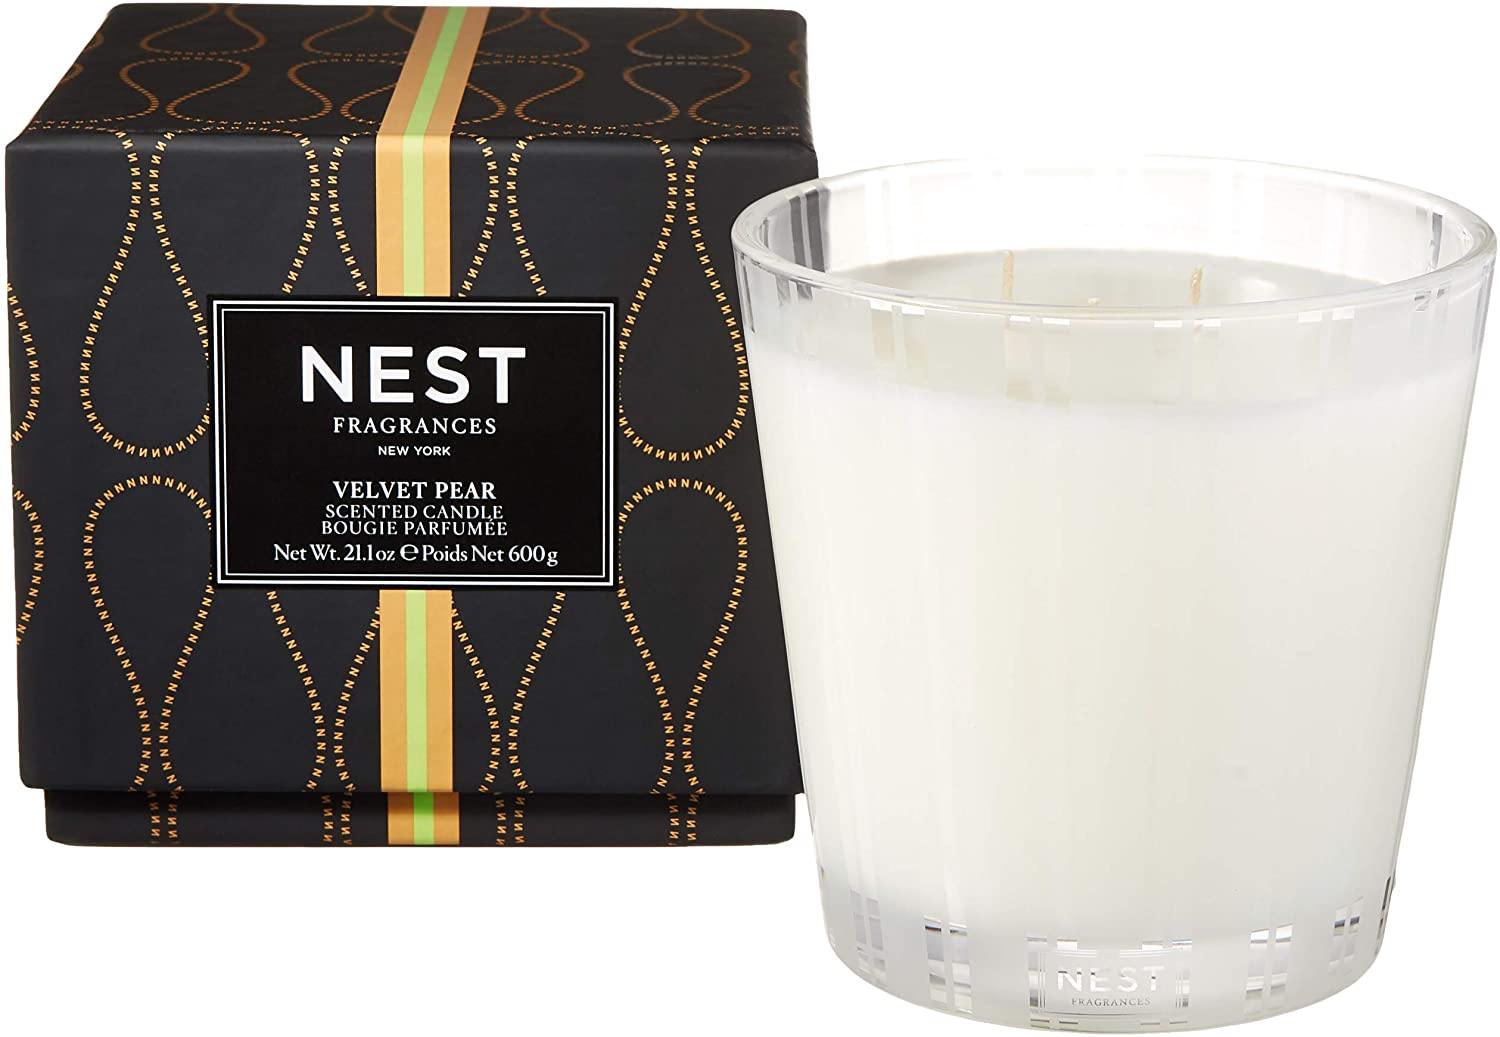 Nest Fragrances Velvet Pear Candle - ScentGiant